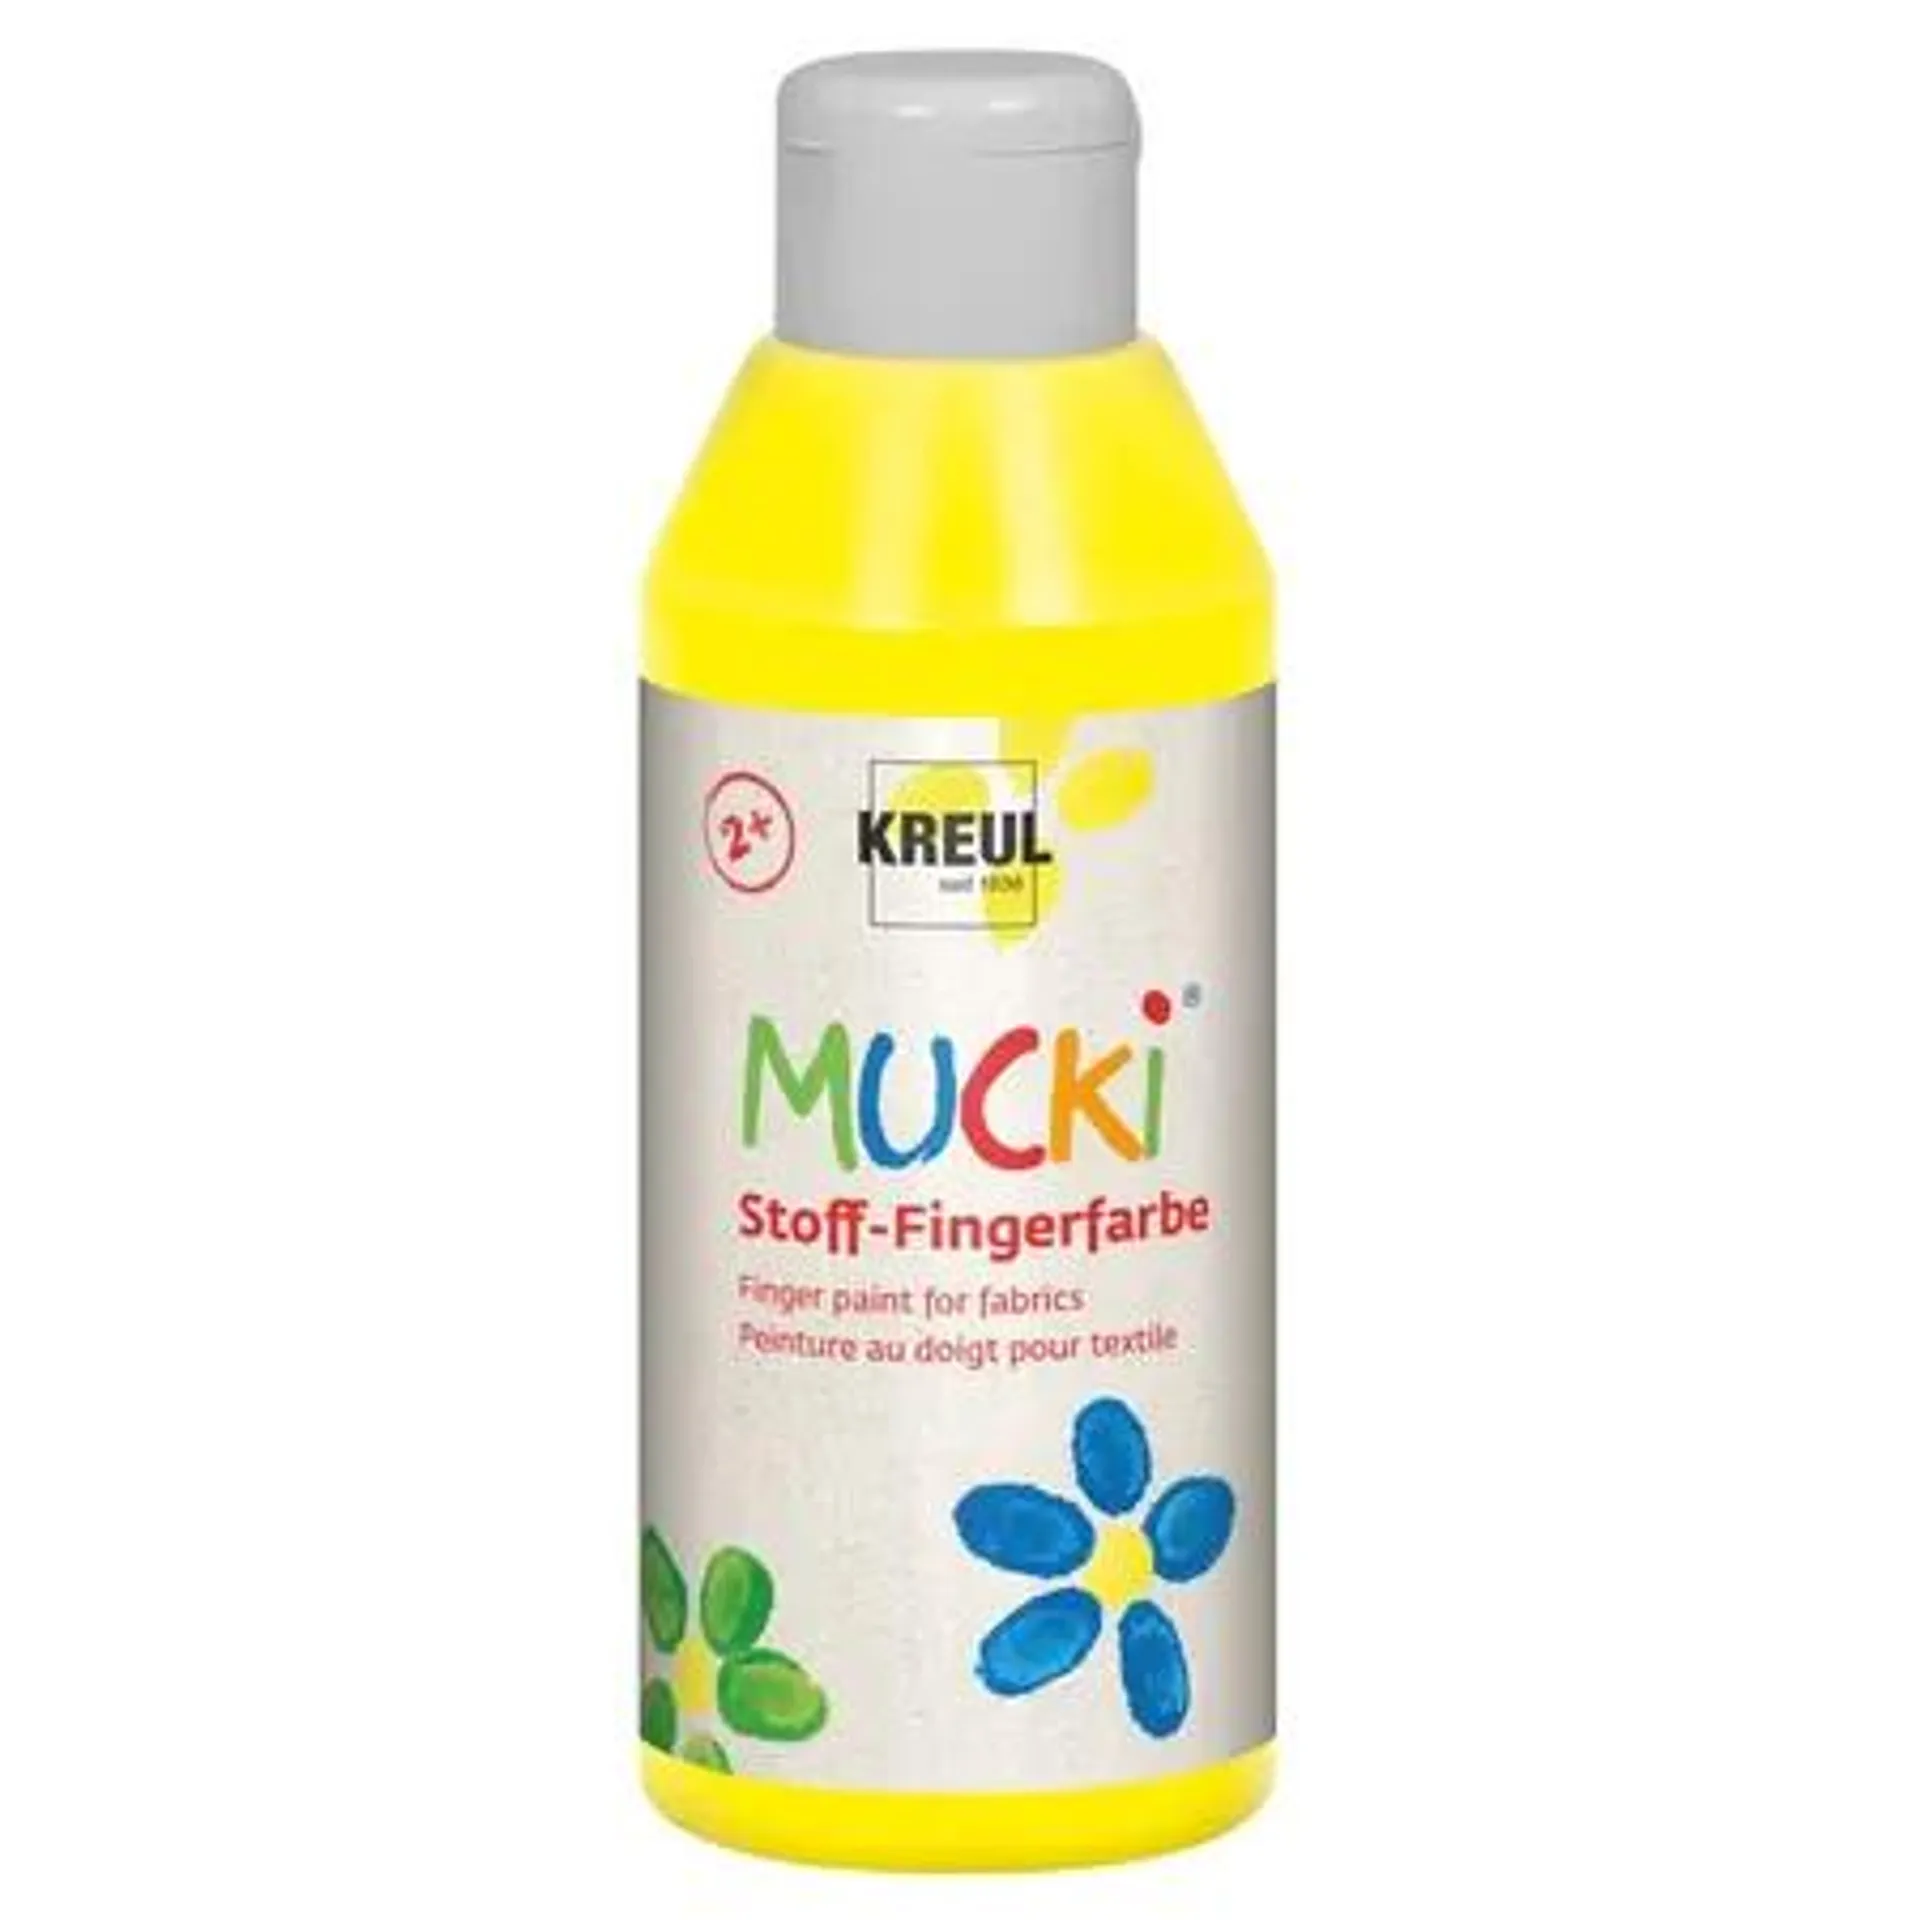 MUCKI Stoff-Fingerfarbe Gelb 250 ml